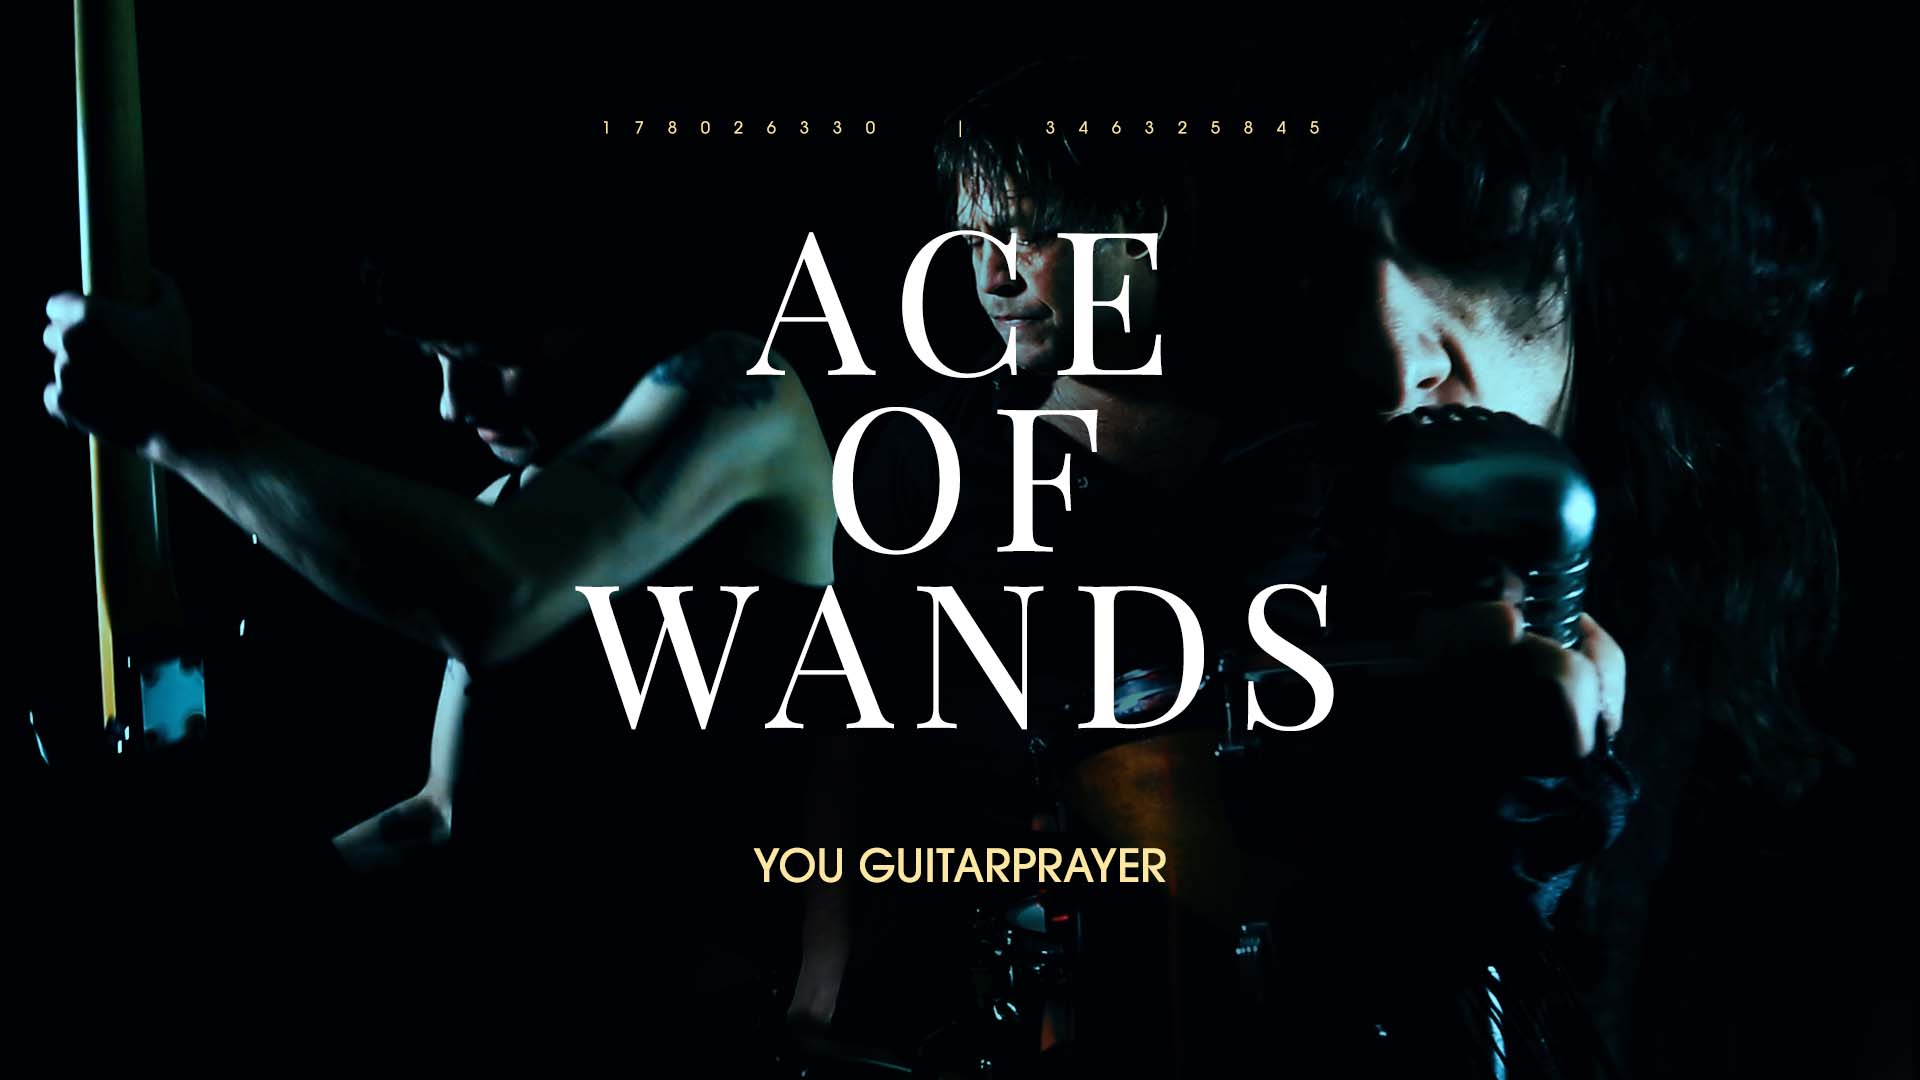 YOU GUITARPRAYER "Ace Of Wands" Video